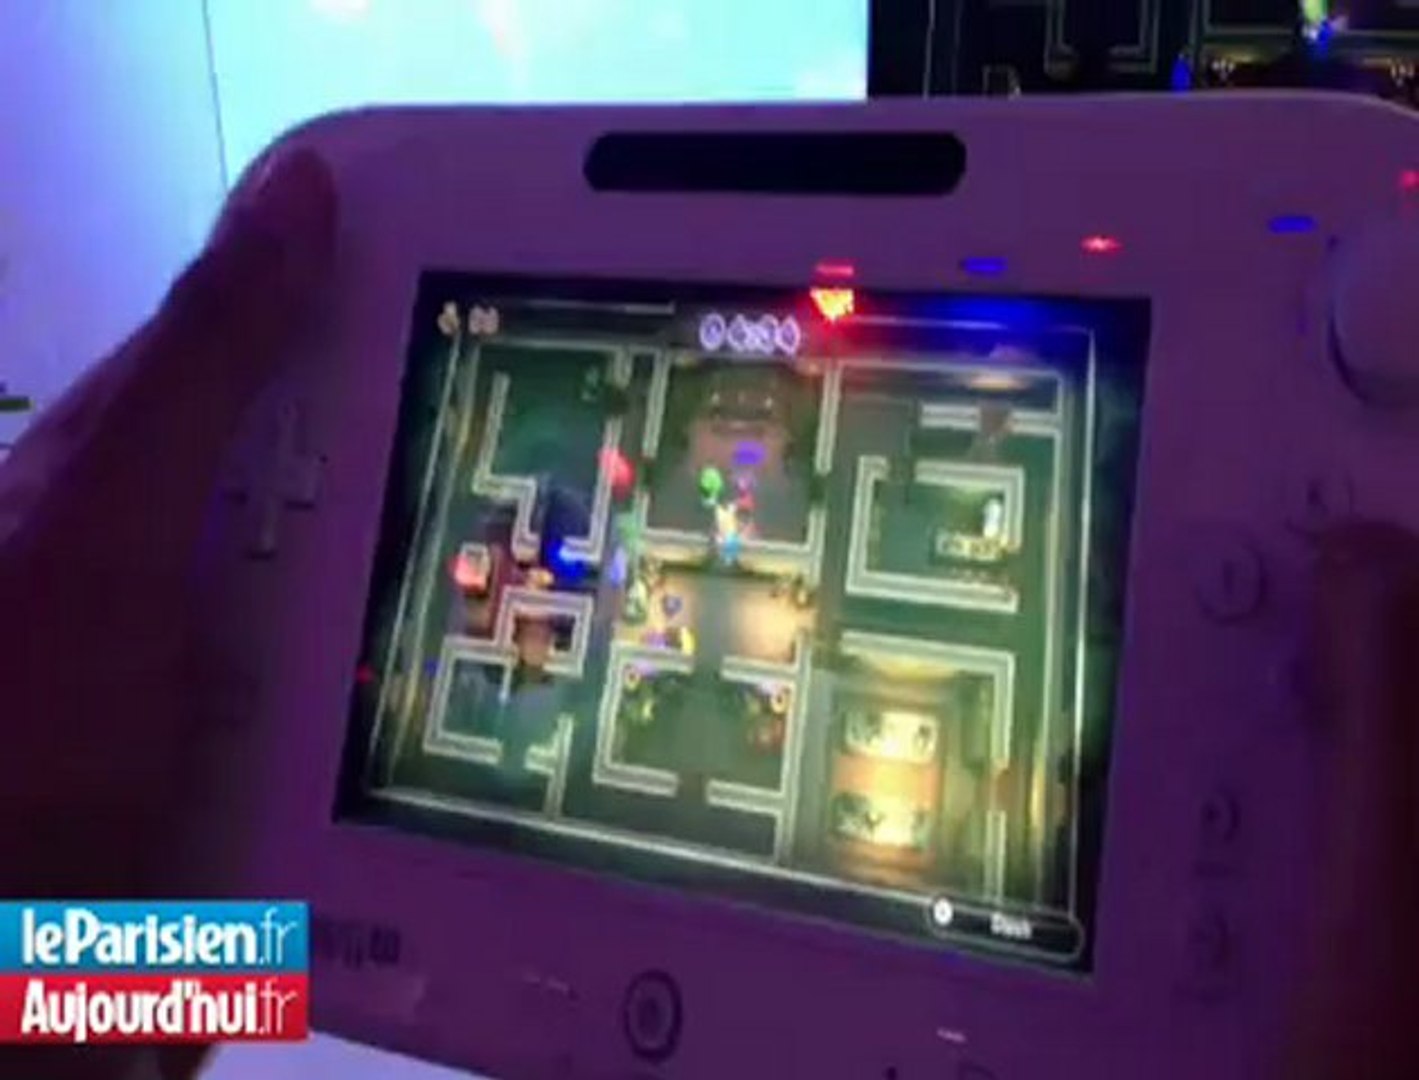 Demo Luigi's Mansion sur Wii U - Vidéo Dailymotion